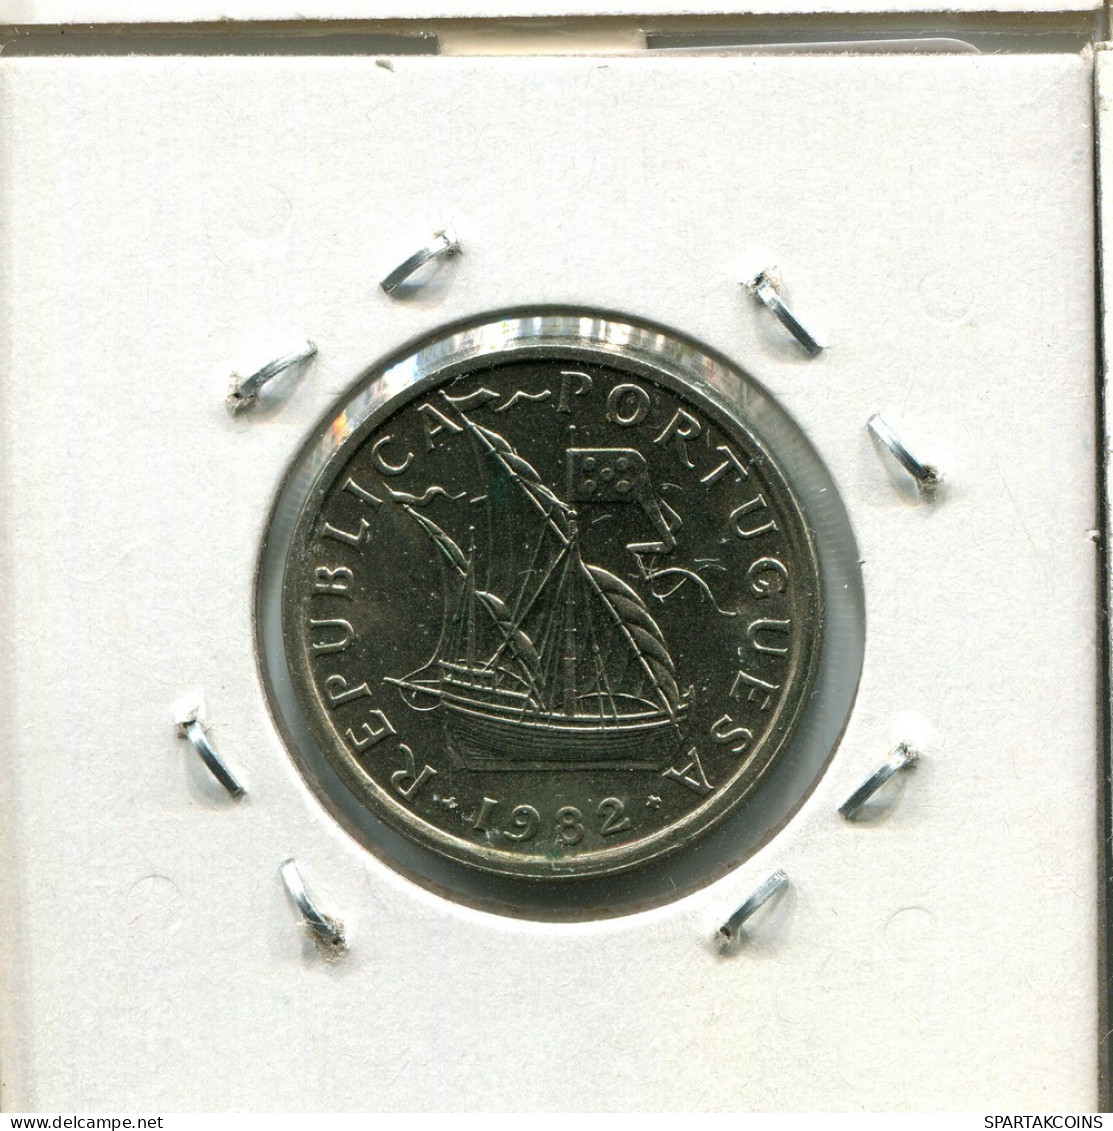 5 ESCUDOS 1982 PORTUGAL Coin #AT381.U.A - Portugal